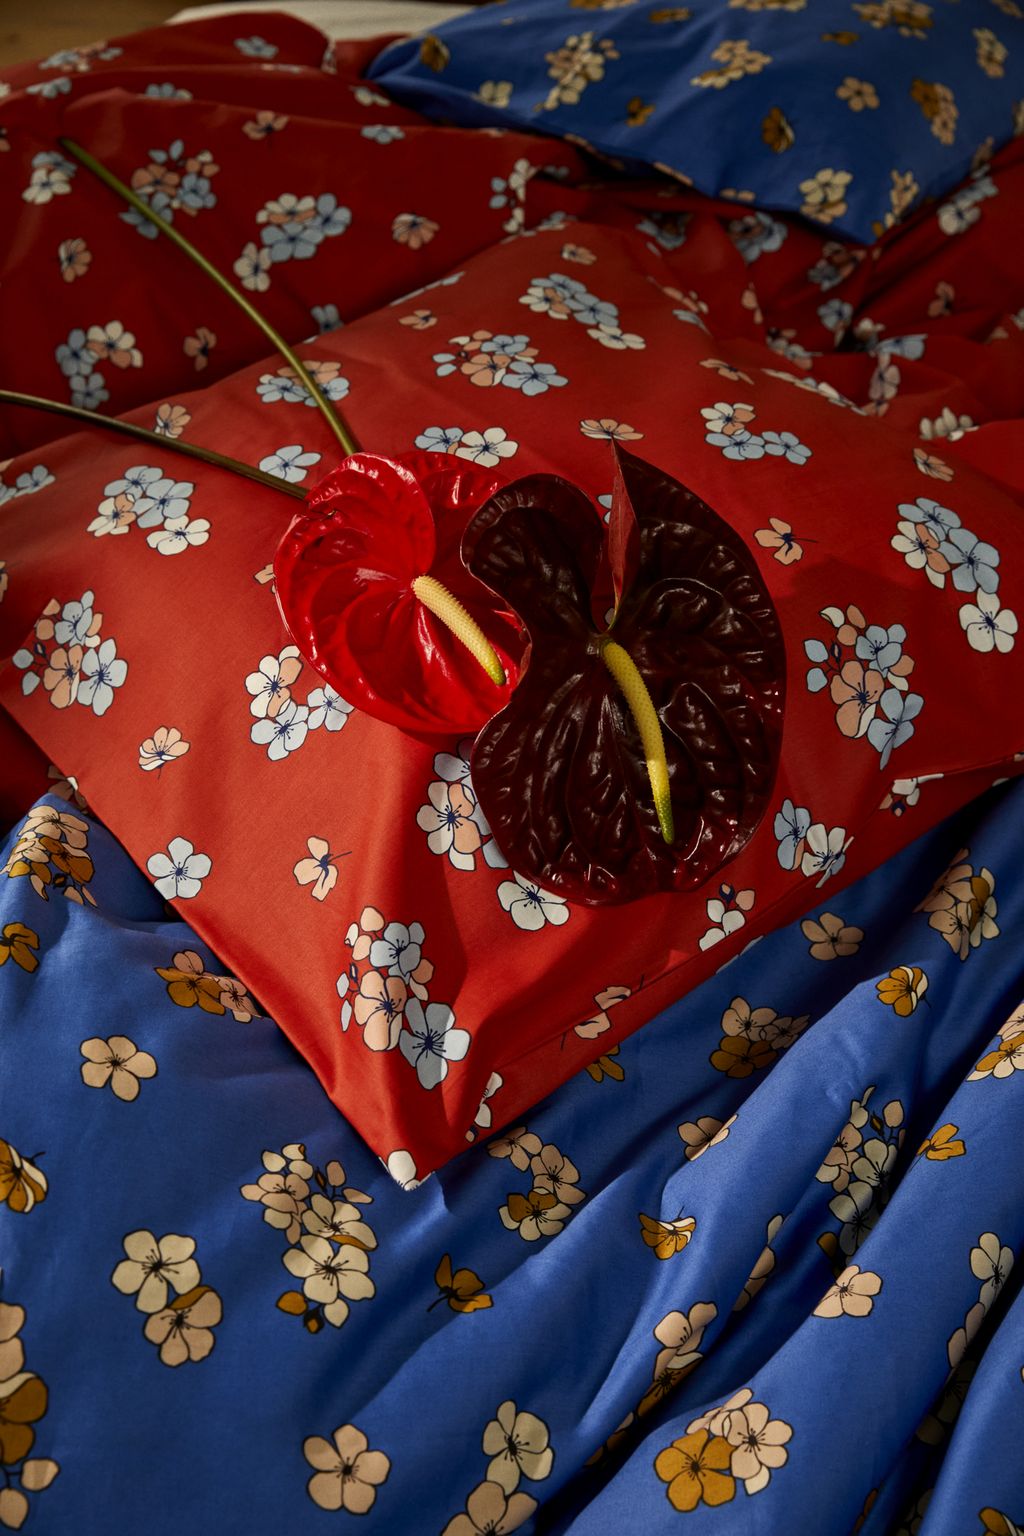 JUNA Stora behagligt sängkläder 200x220 cm, chili